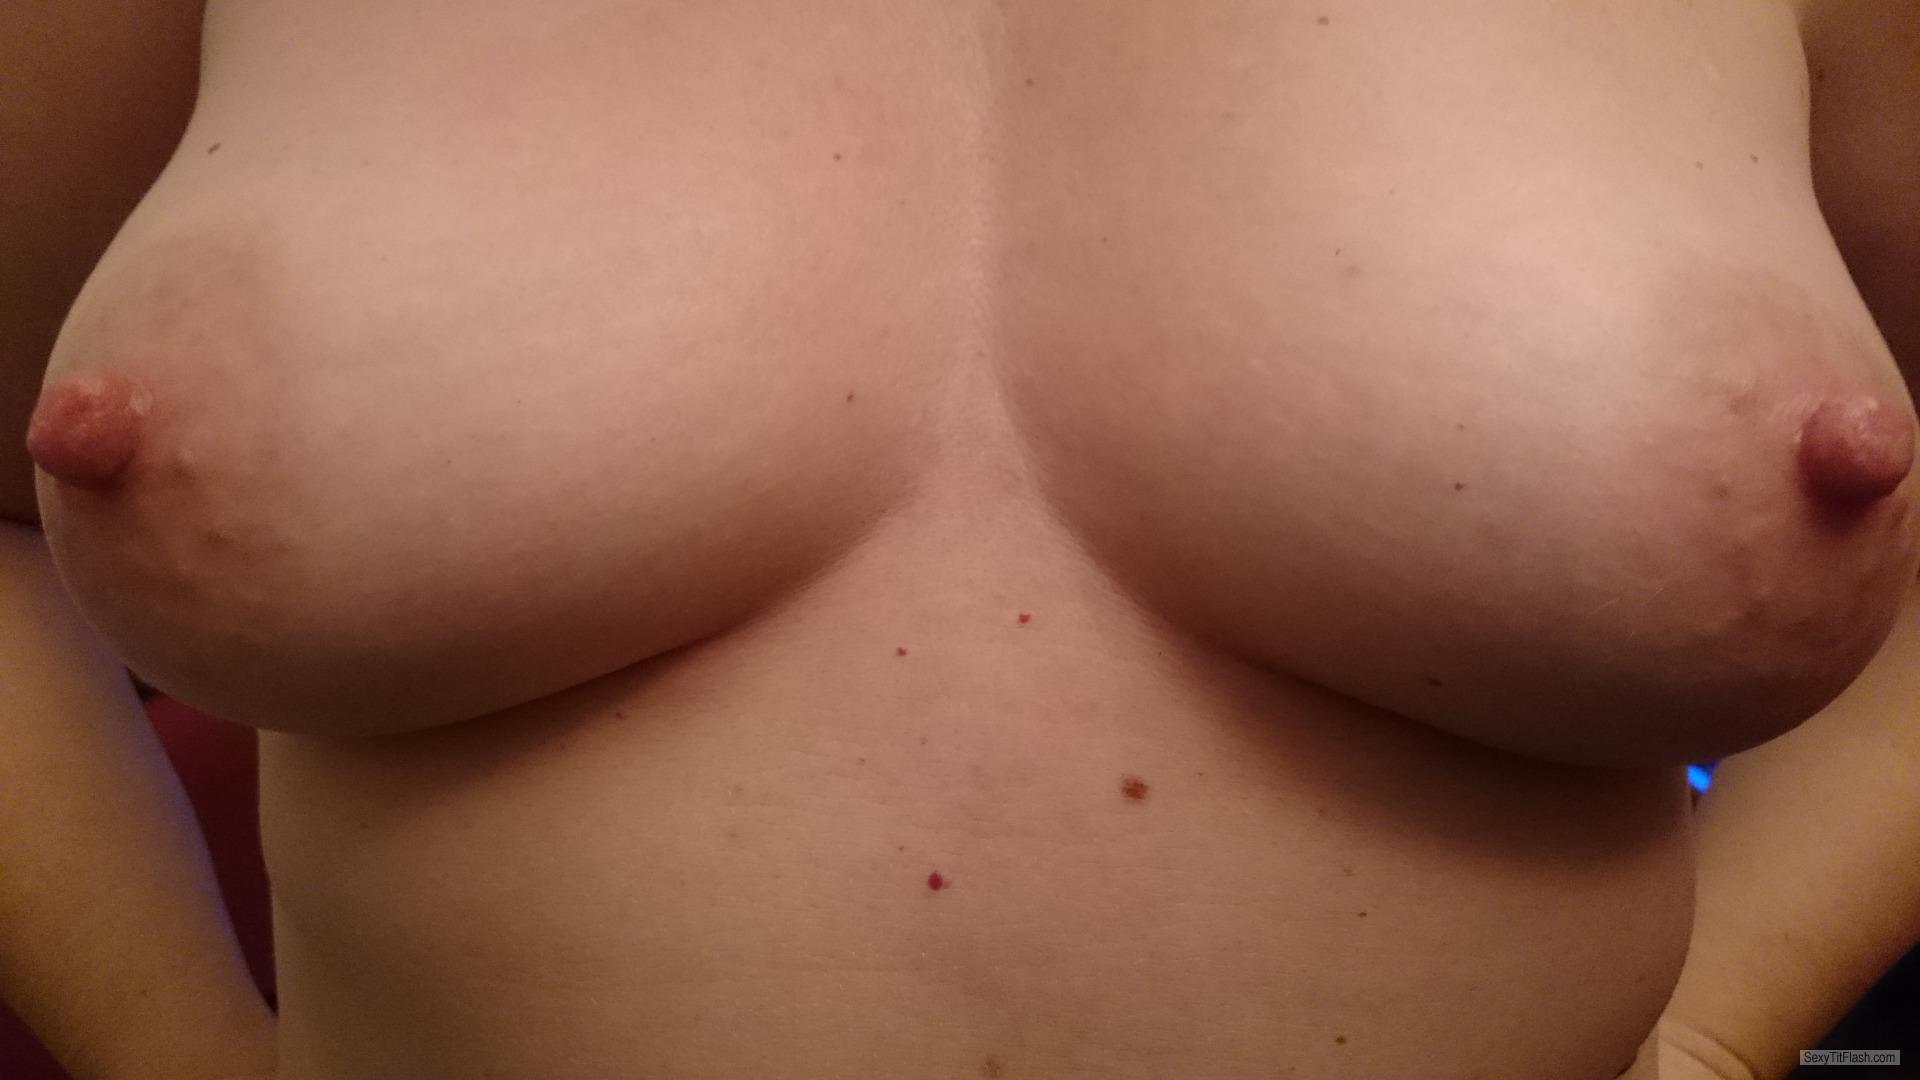 Tit Flash: My Medium Tits - Elisa from Italy